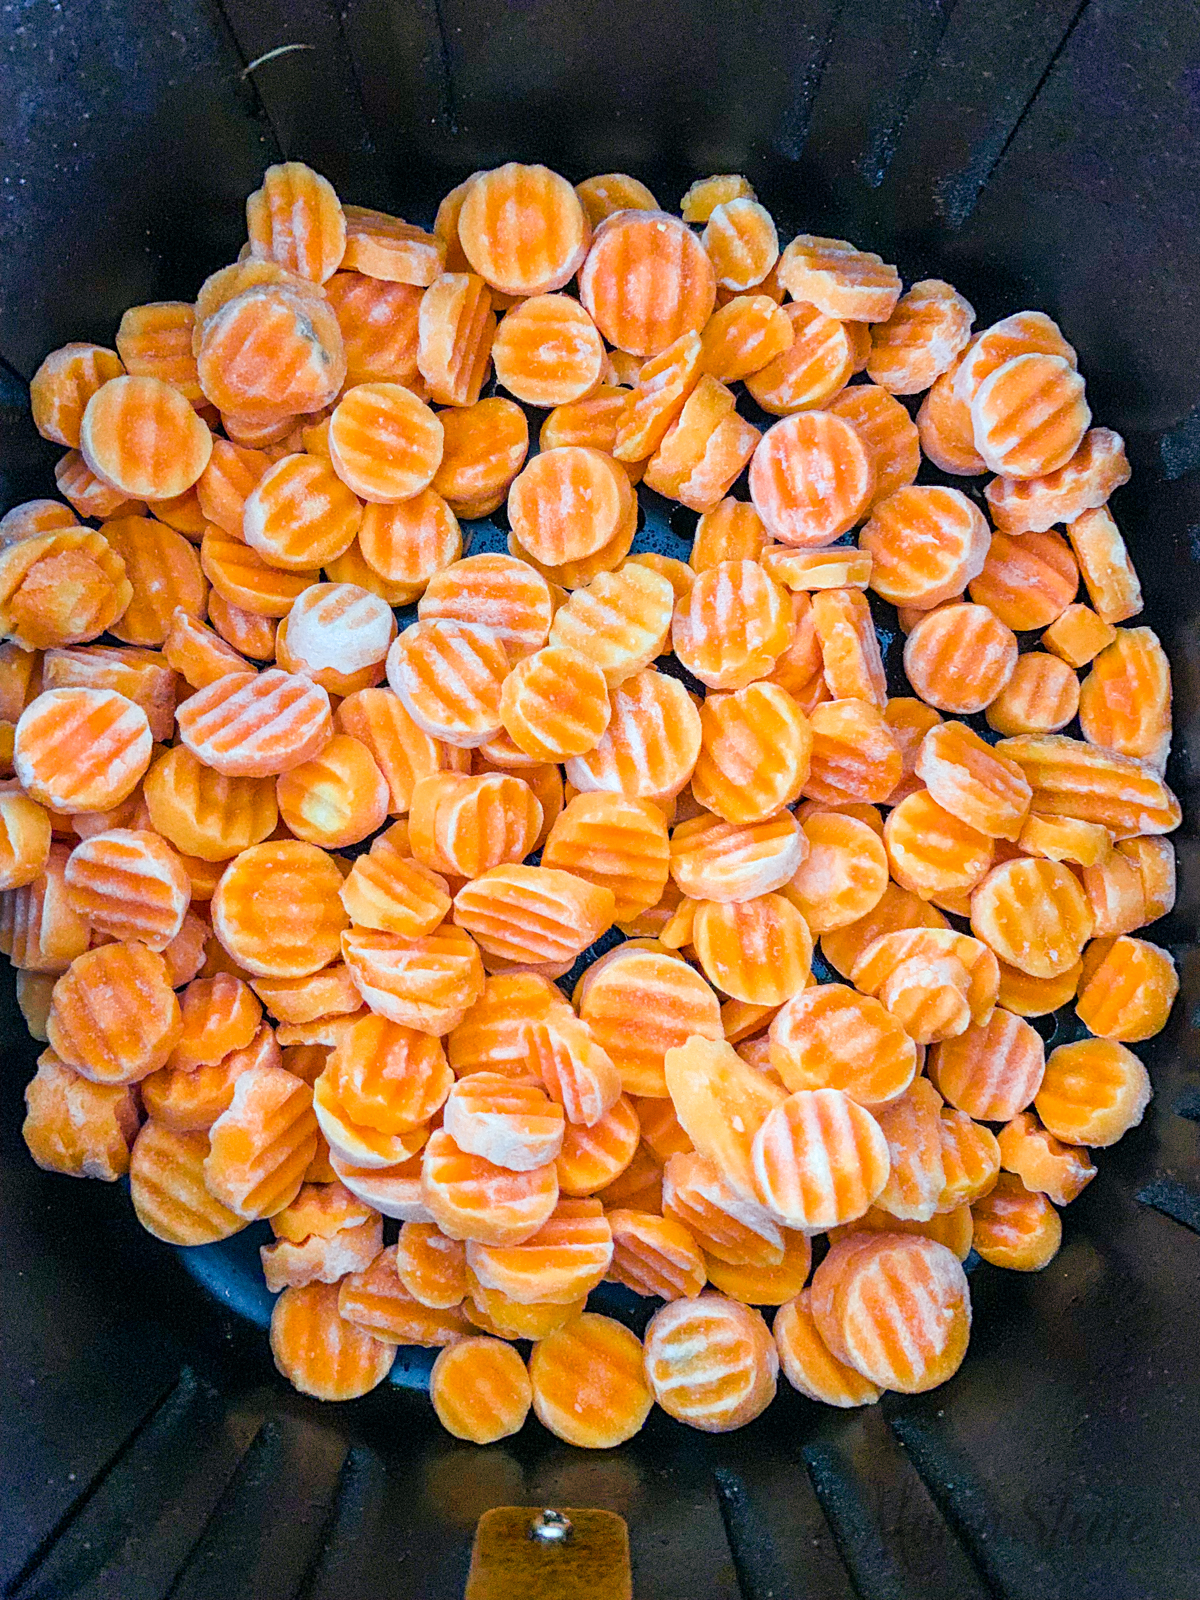 Frozen carrots in an air fryer basket.